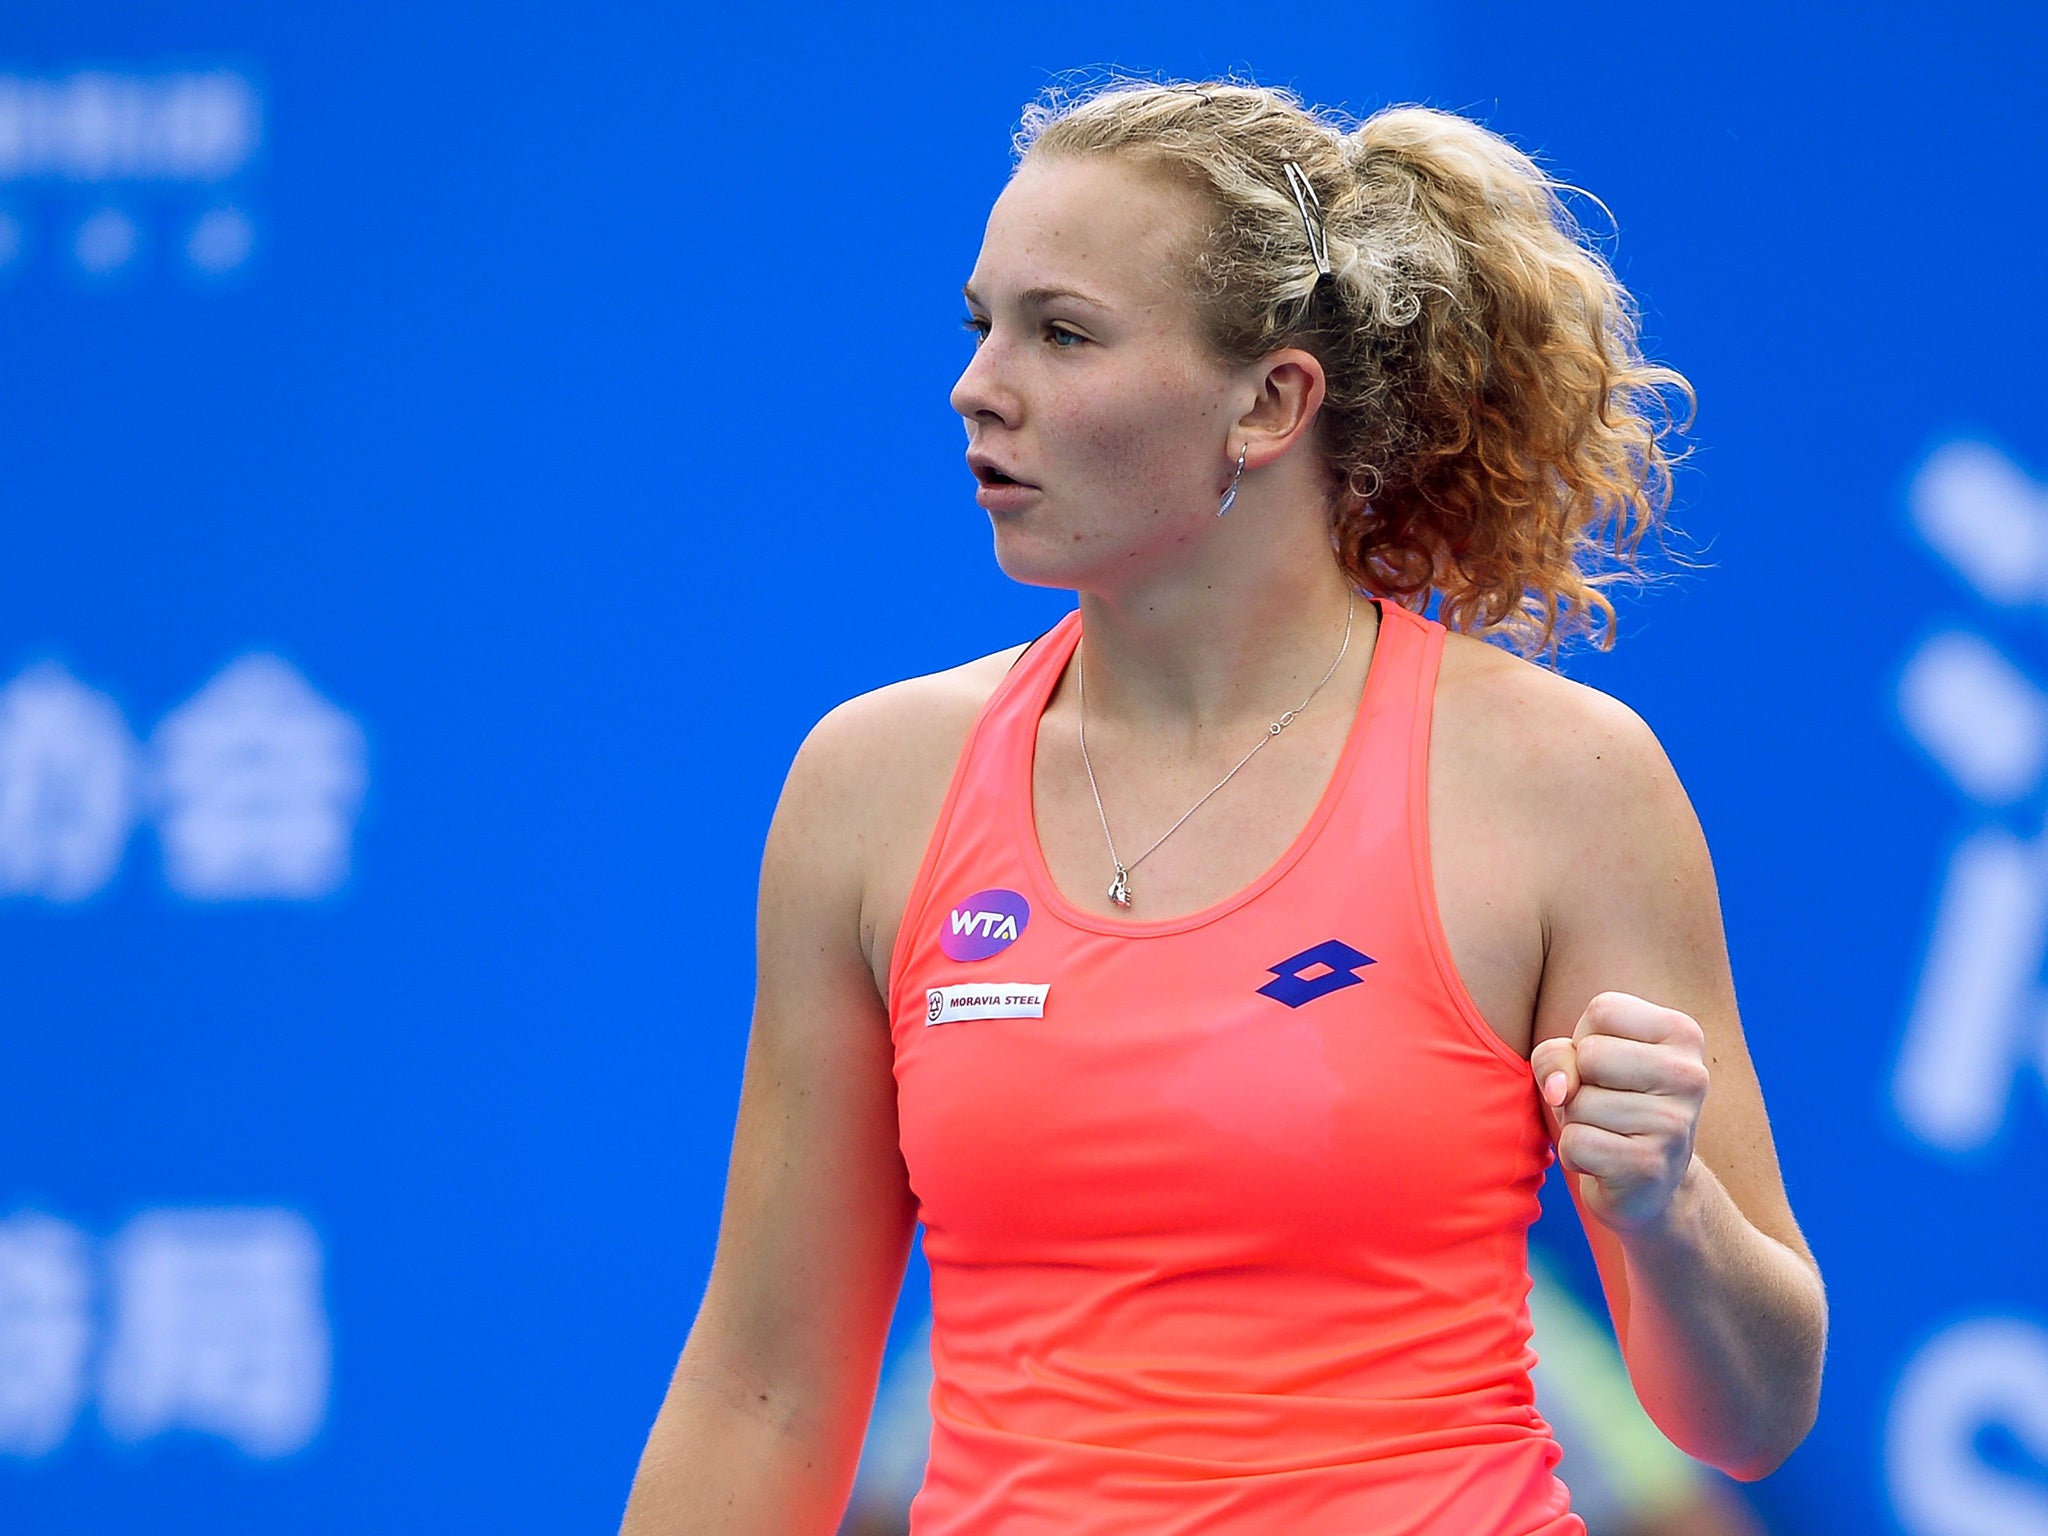 Katerina Siniakova showcased a range of power serving and baseline hitting